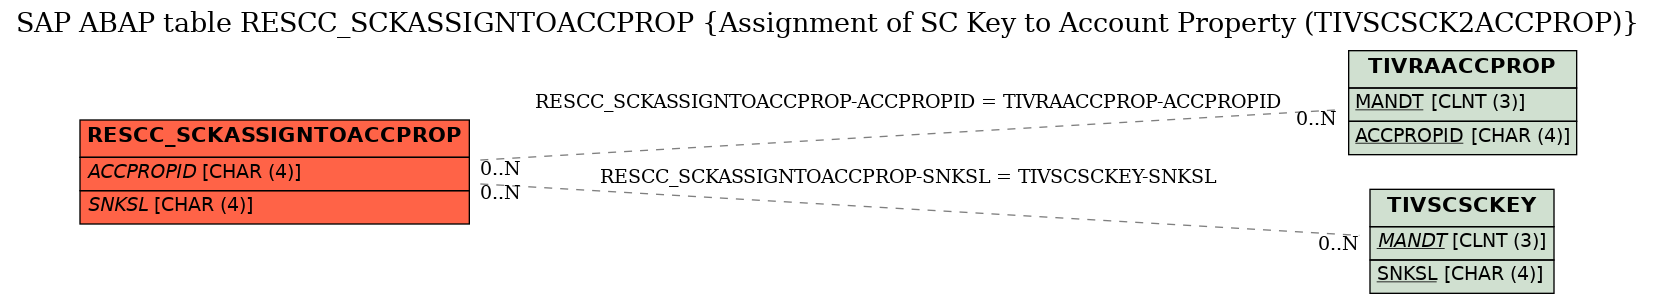 E-R Diagram for table RESCC_SCKASSIGNTOACCPROP (Assignment of SC Key to Account Property (TIVSCSCK2ACCPROP))